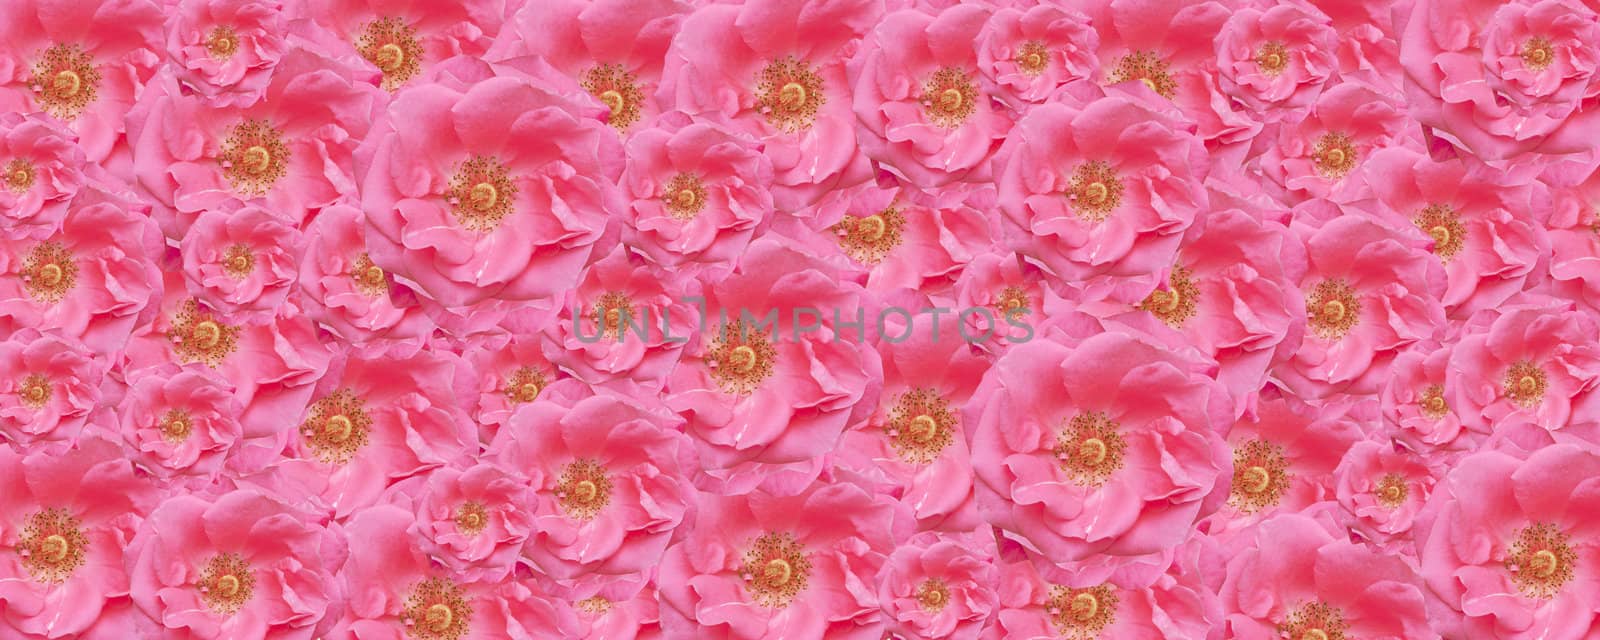 pink rose texture wallpaper floral backdrop by sherj